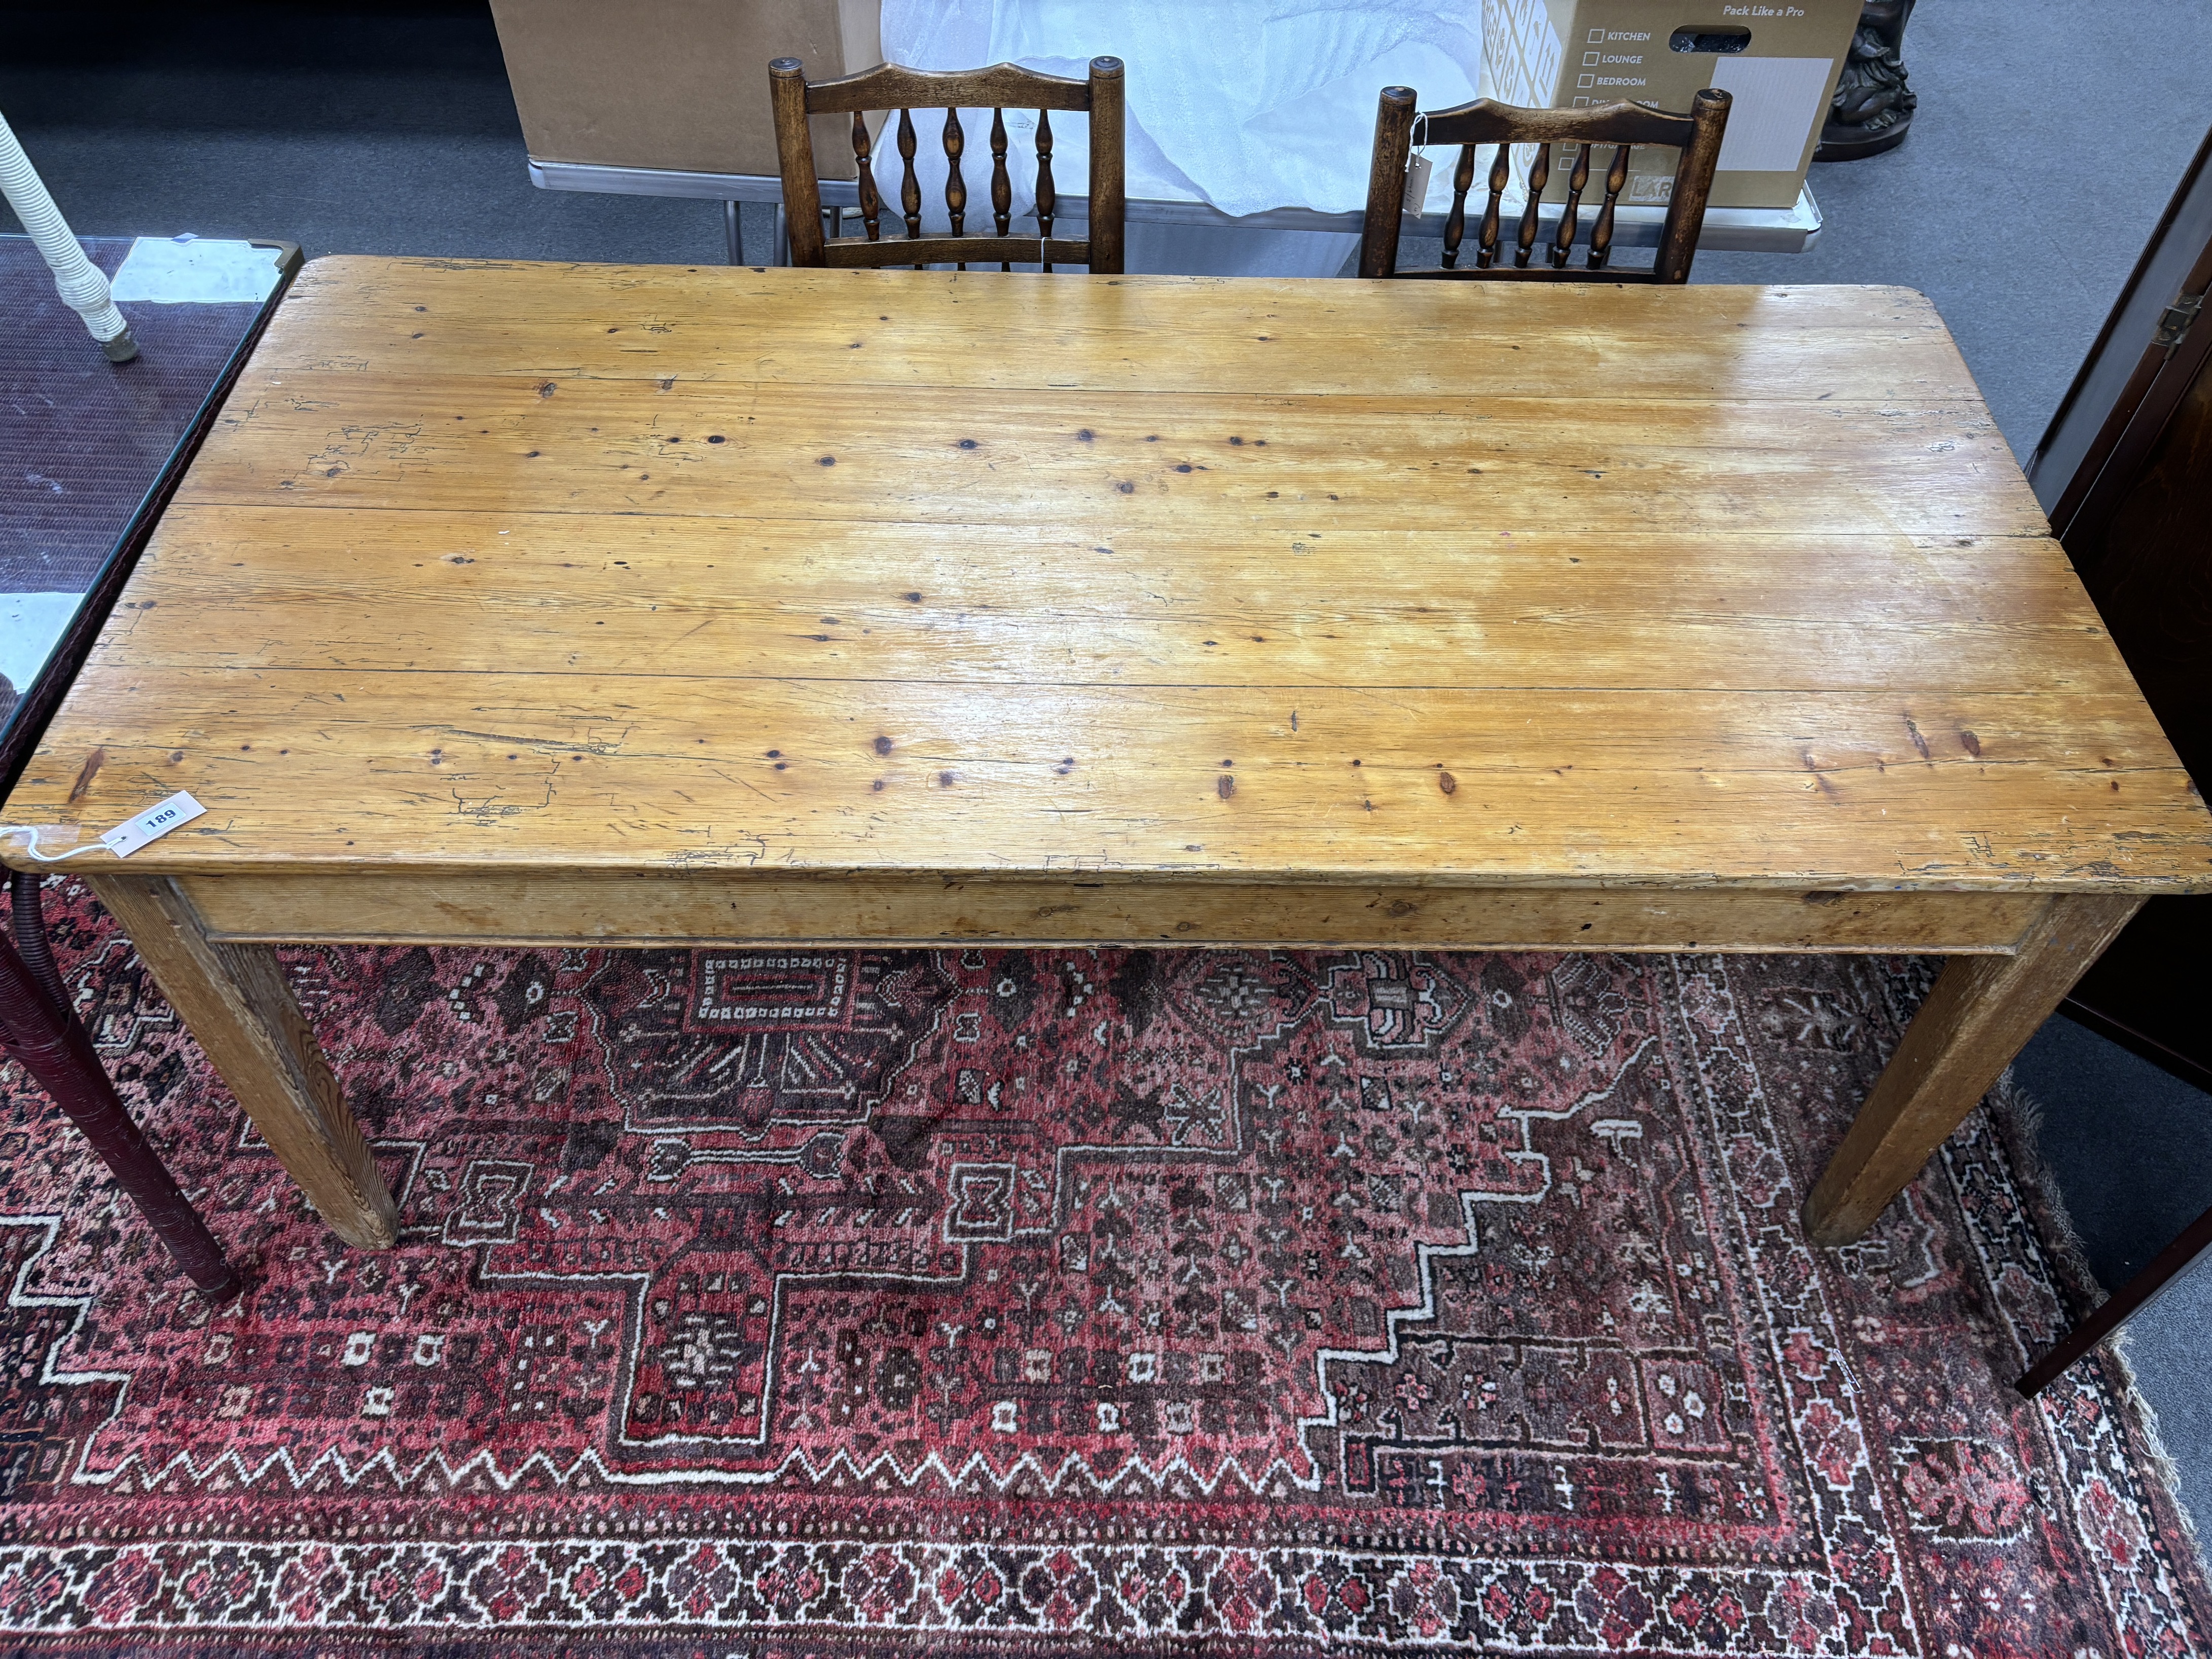 A 19th century rectangular pine kitchen table, width 182cm, depth 88cm, height 71cm. Condition - fair